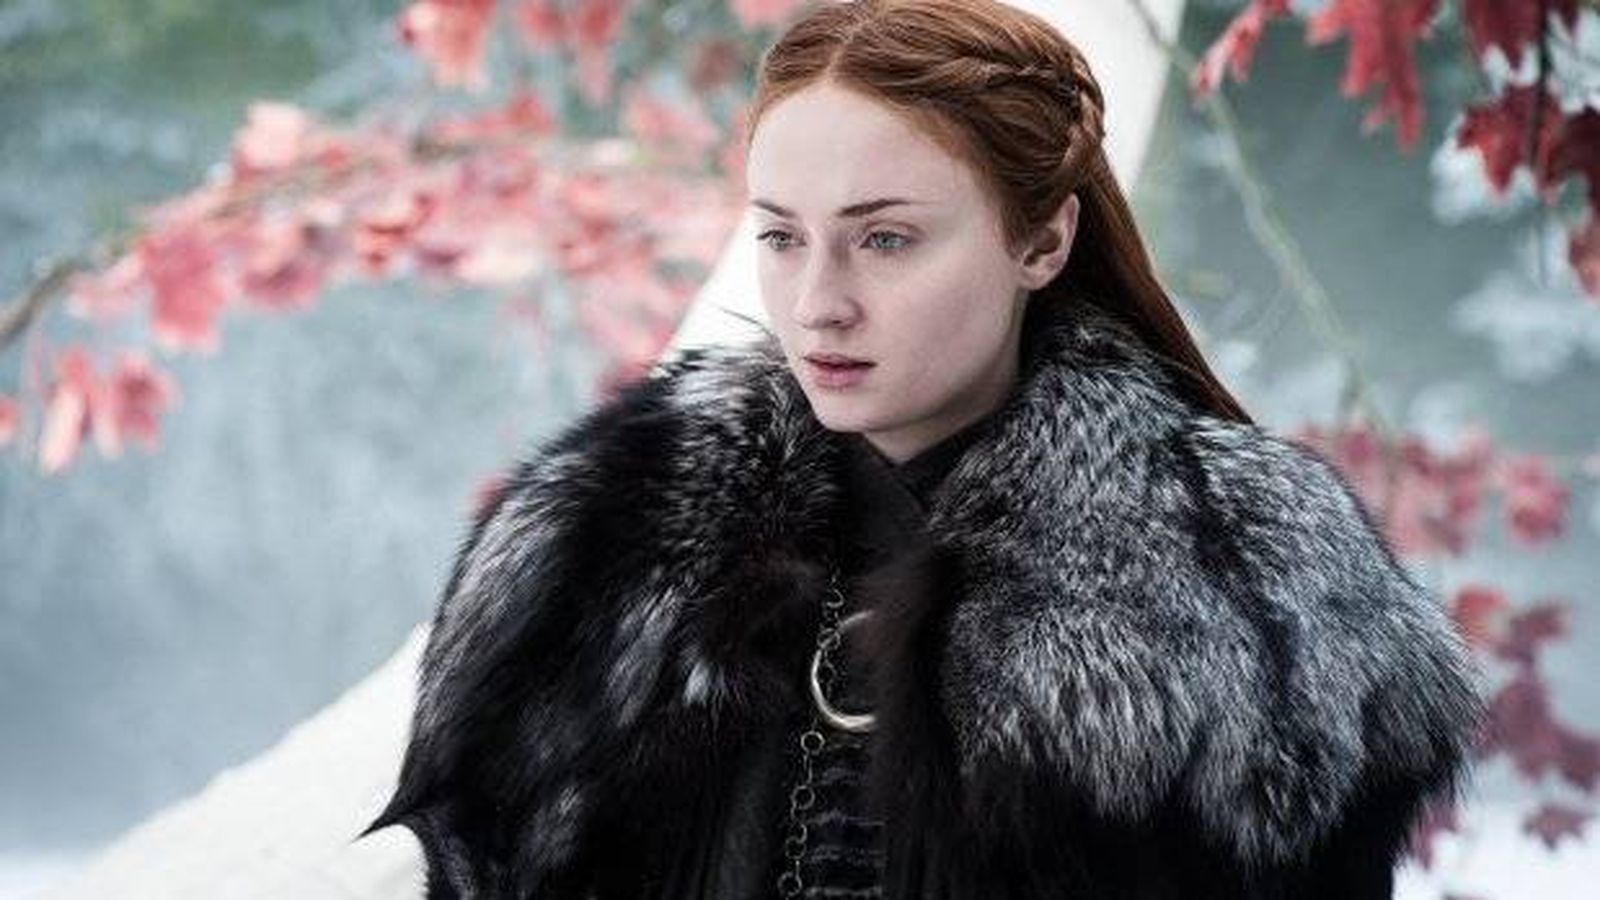 Foto: Imagen de la séptima temporada con Sansa Stark en Invernalia